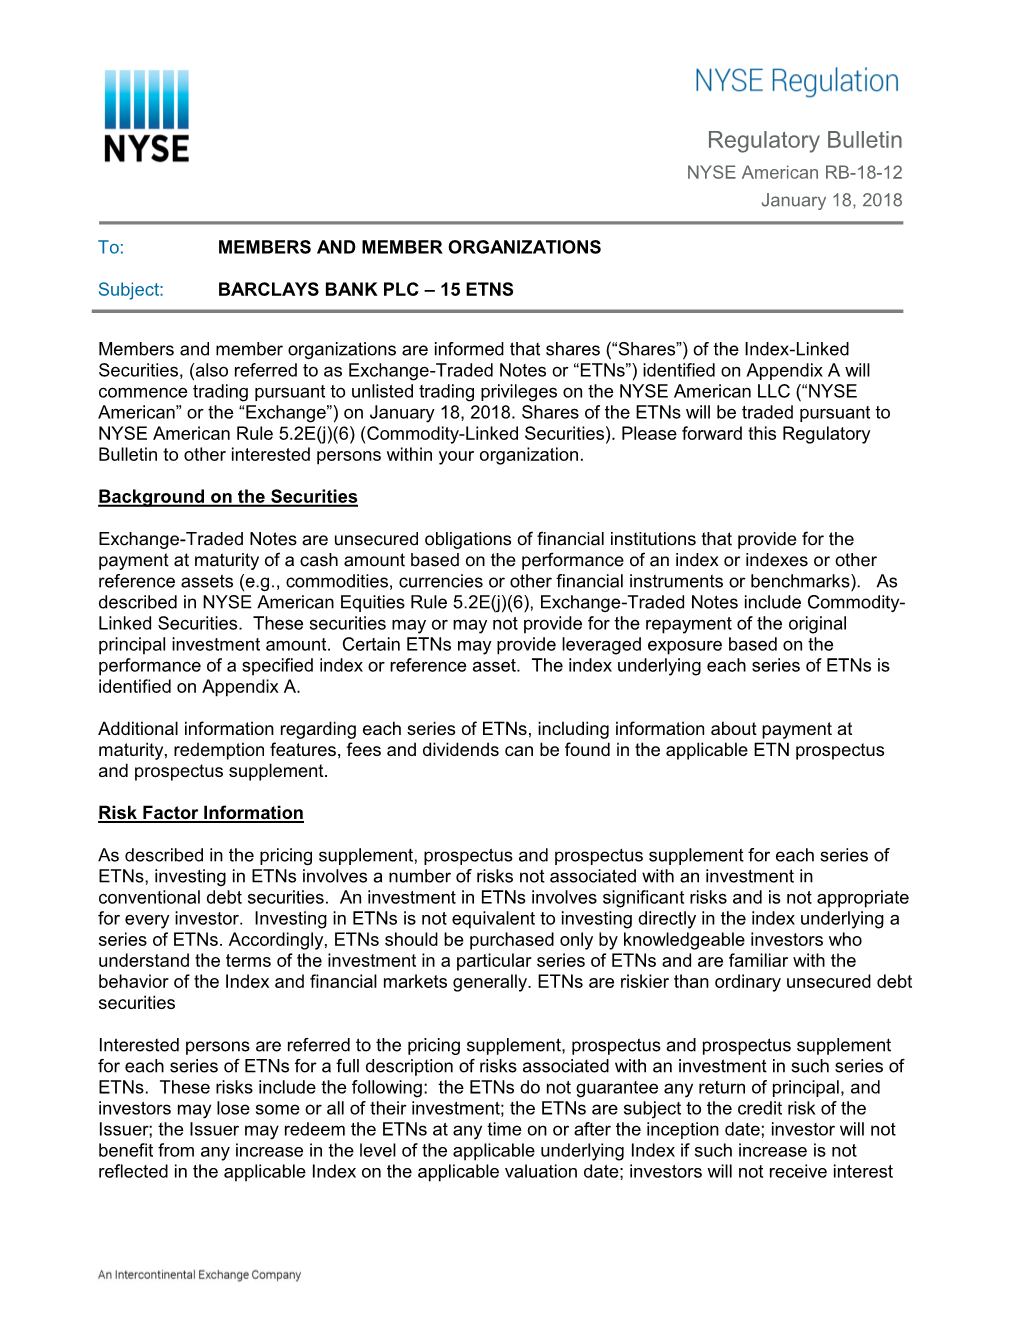 Regulatory Bulletin NYSE American RB-18-12